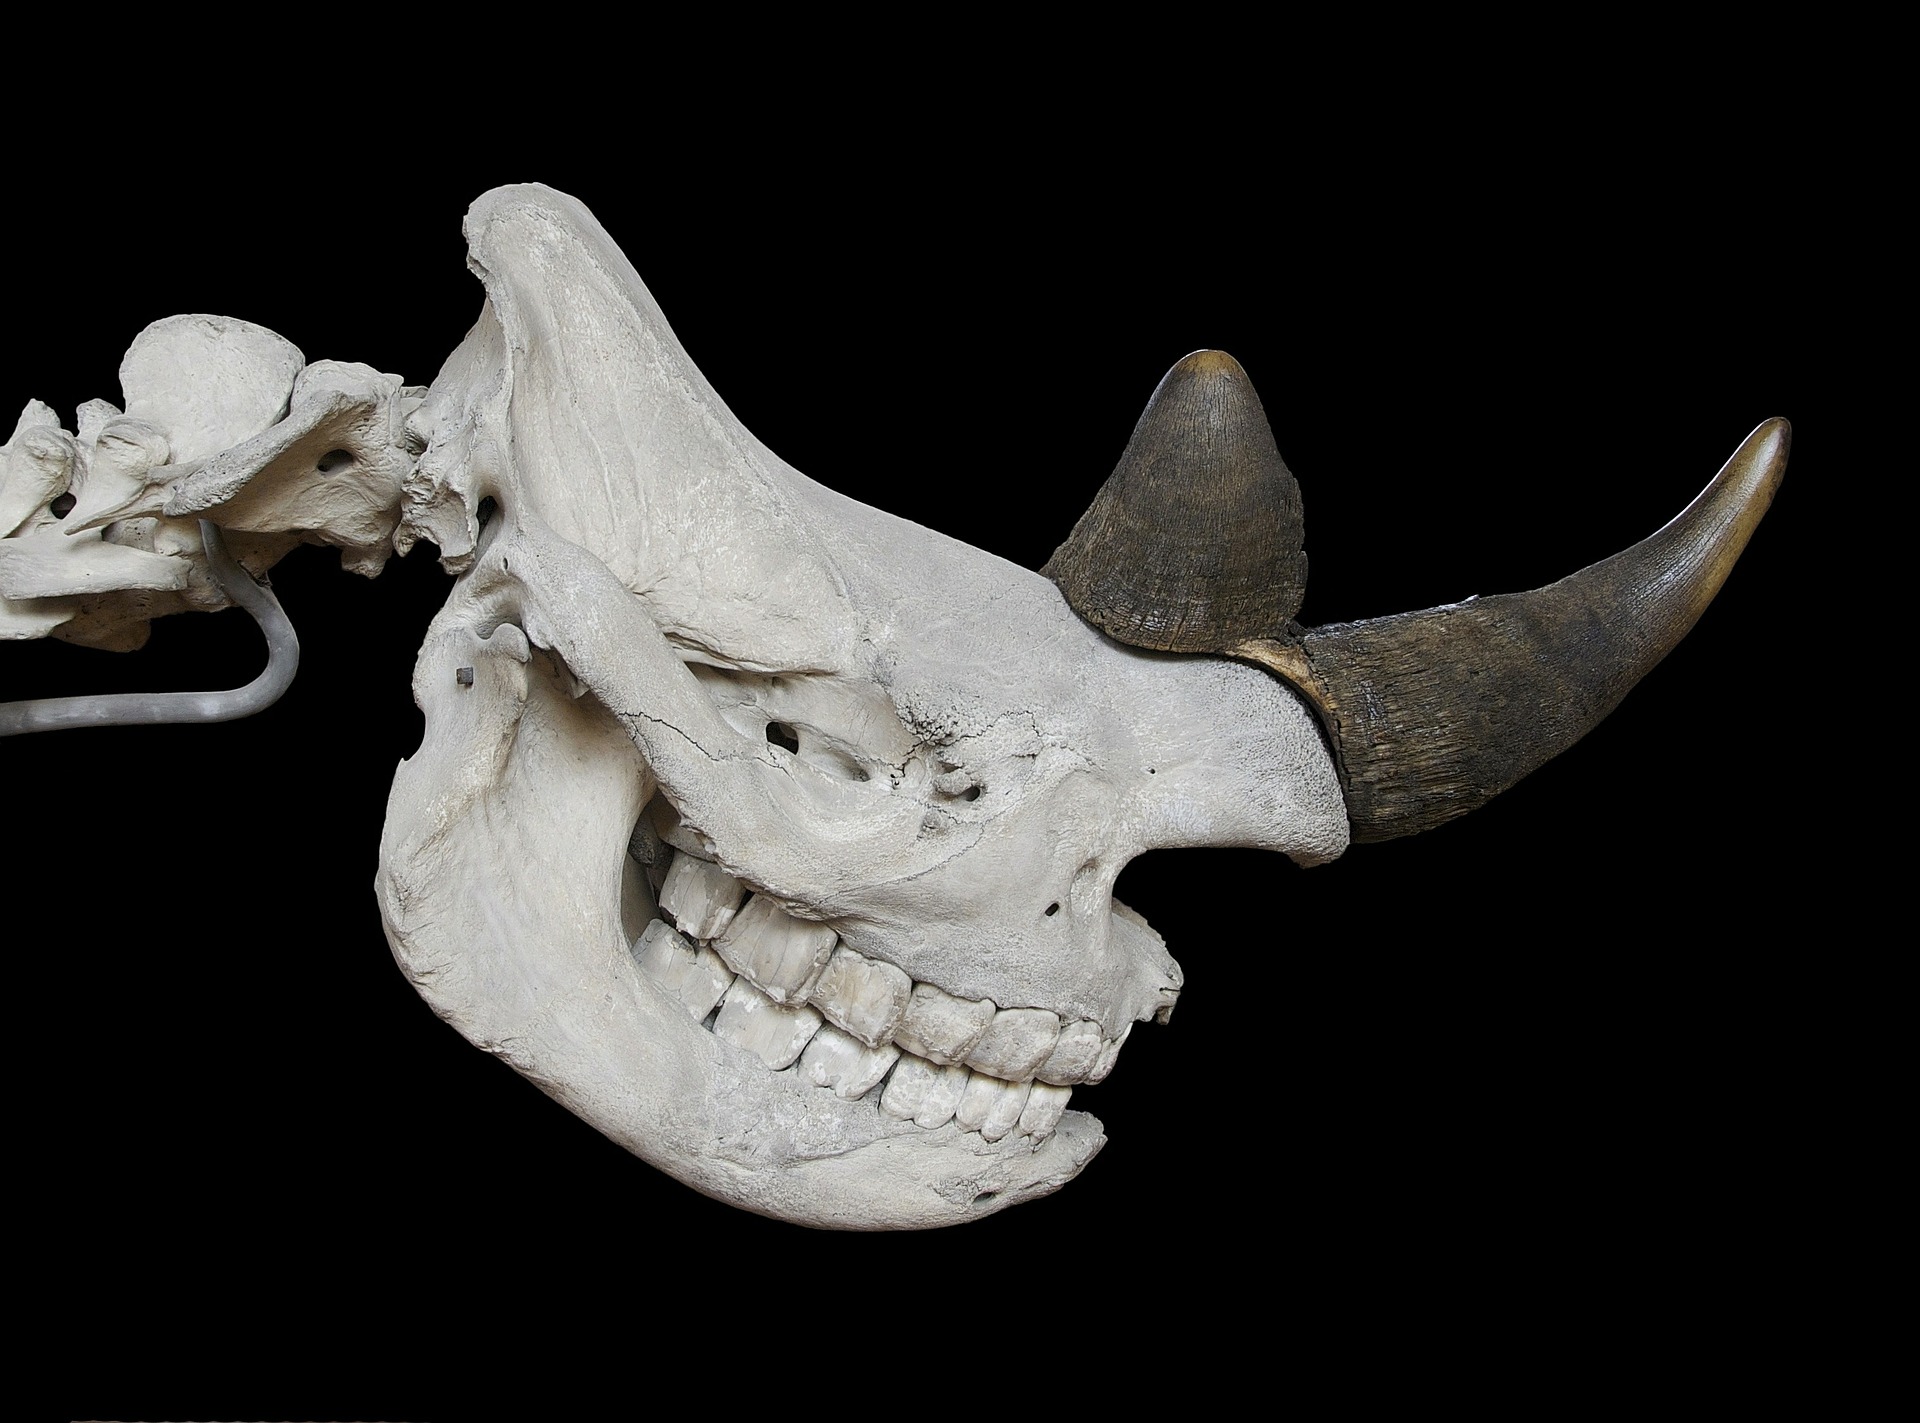 The skull of a Rhino